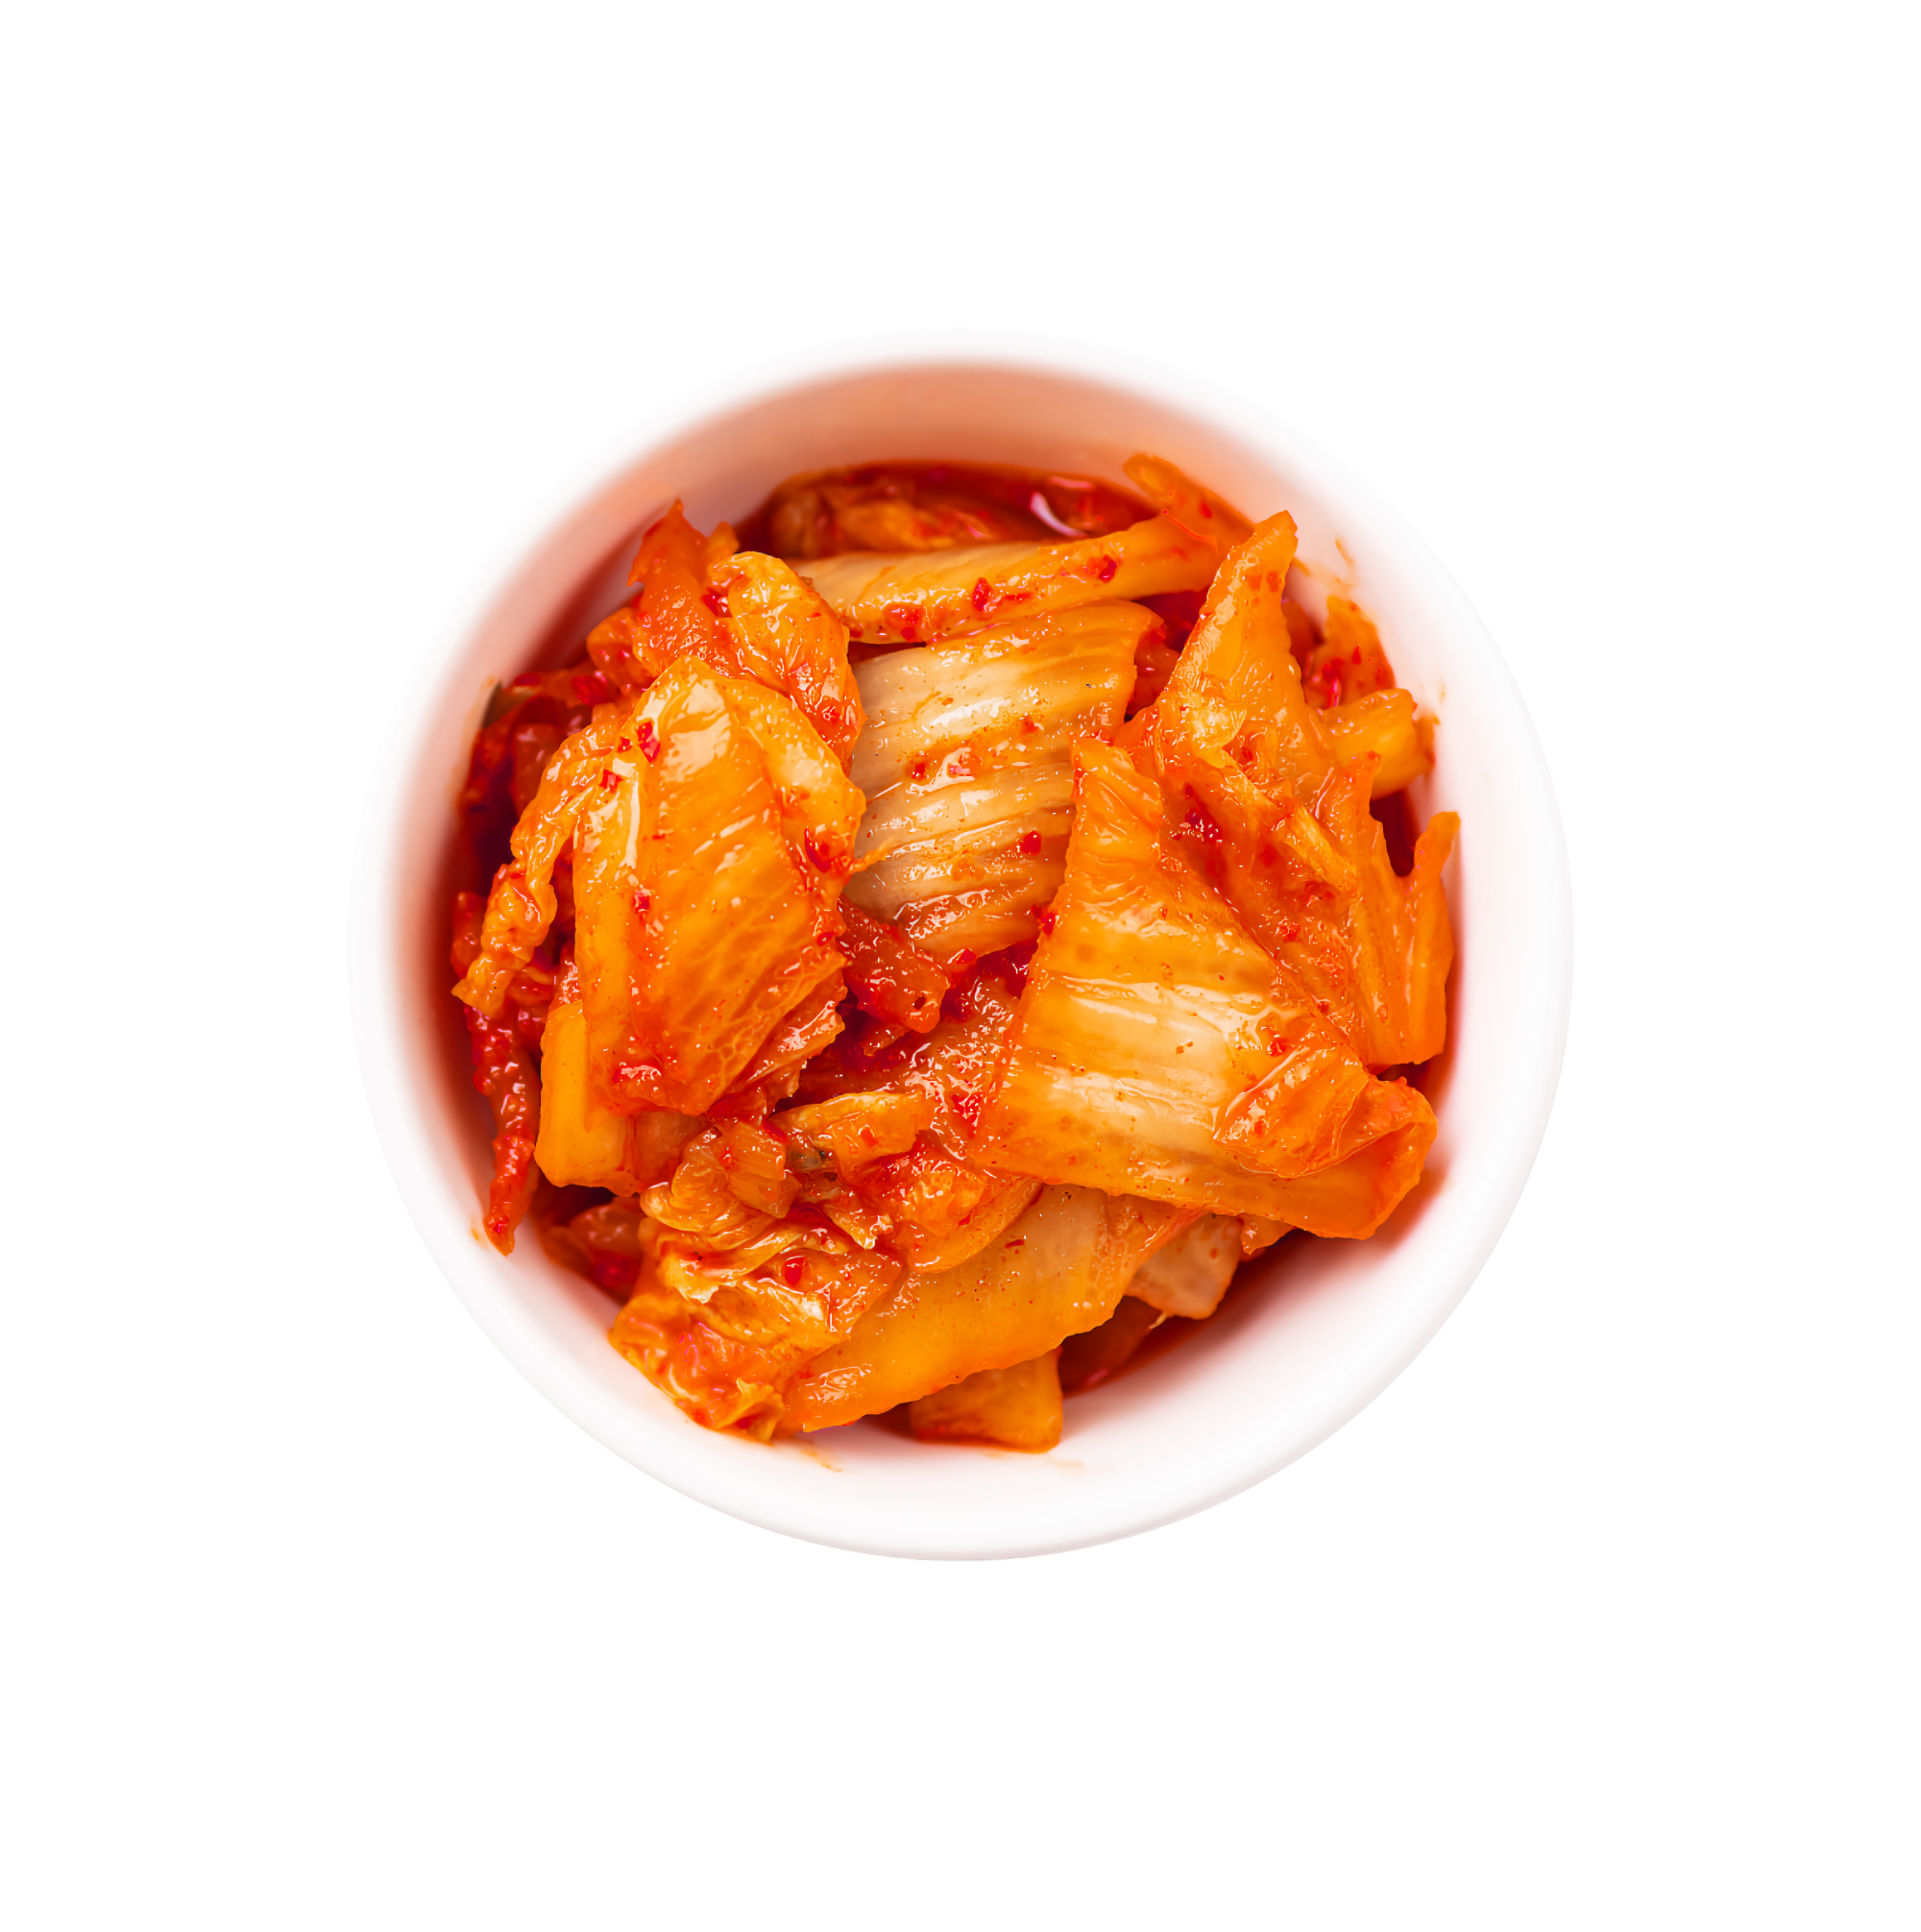 Standing kimchi fridges conquer the market